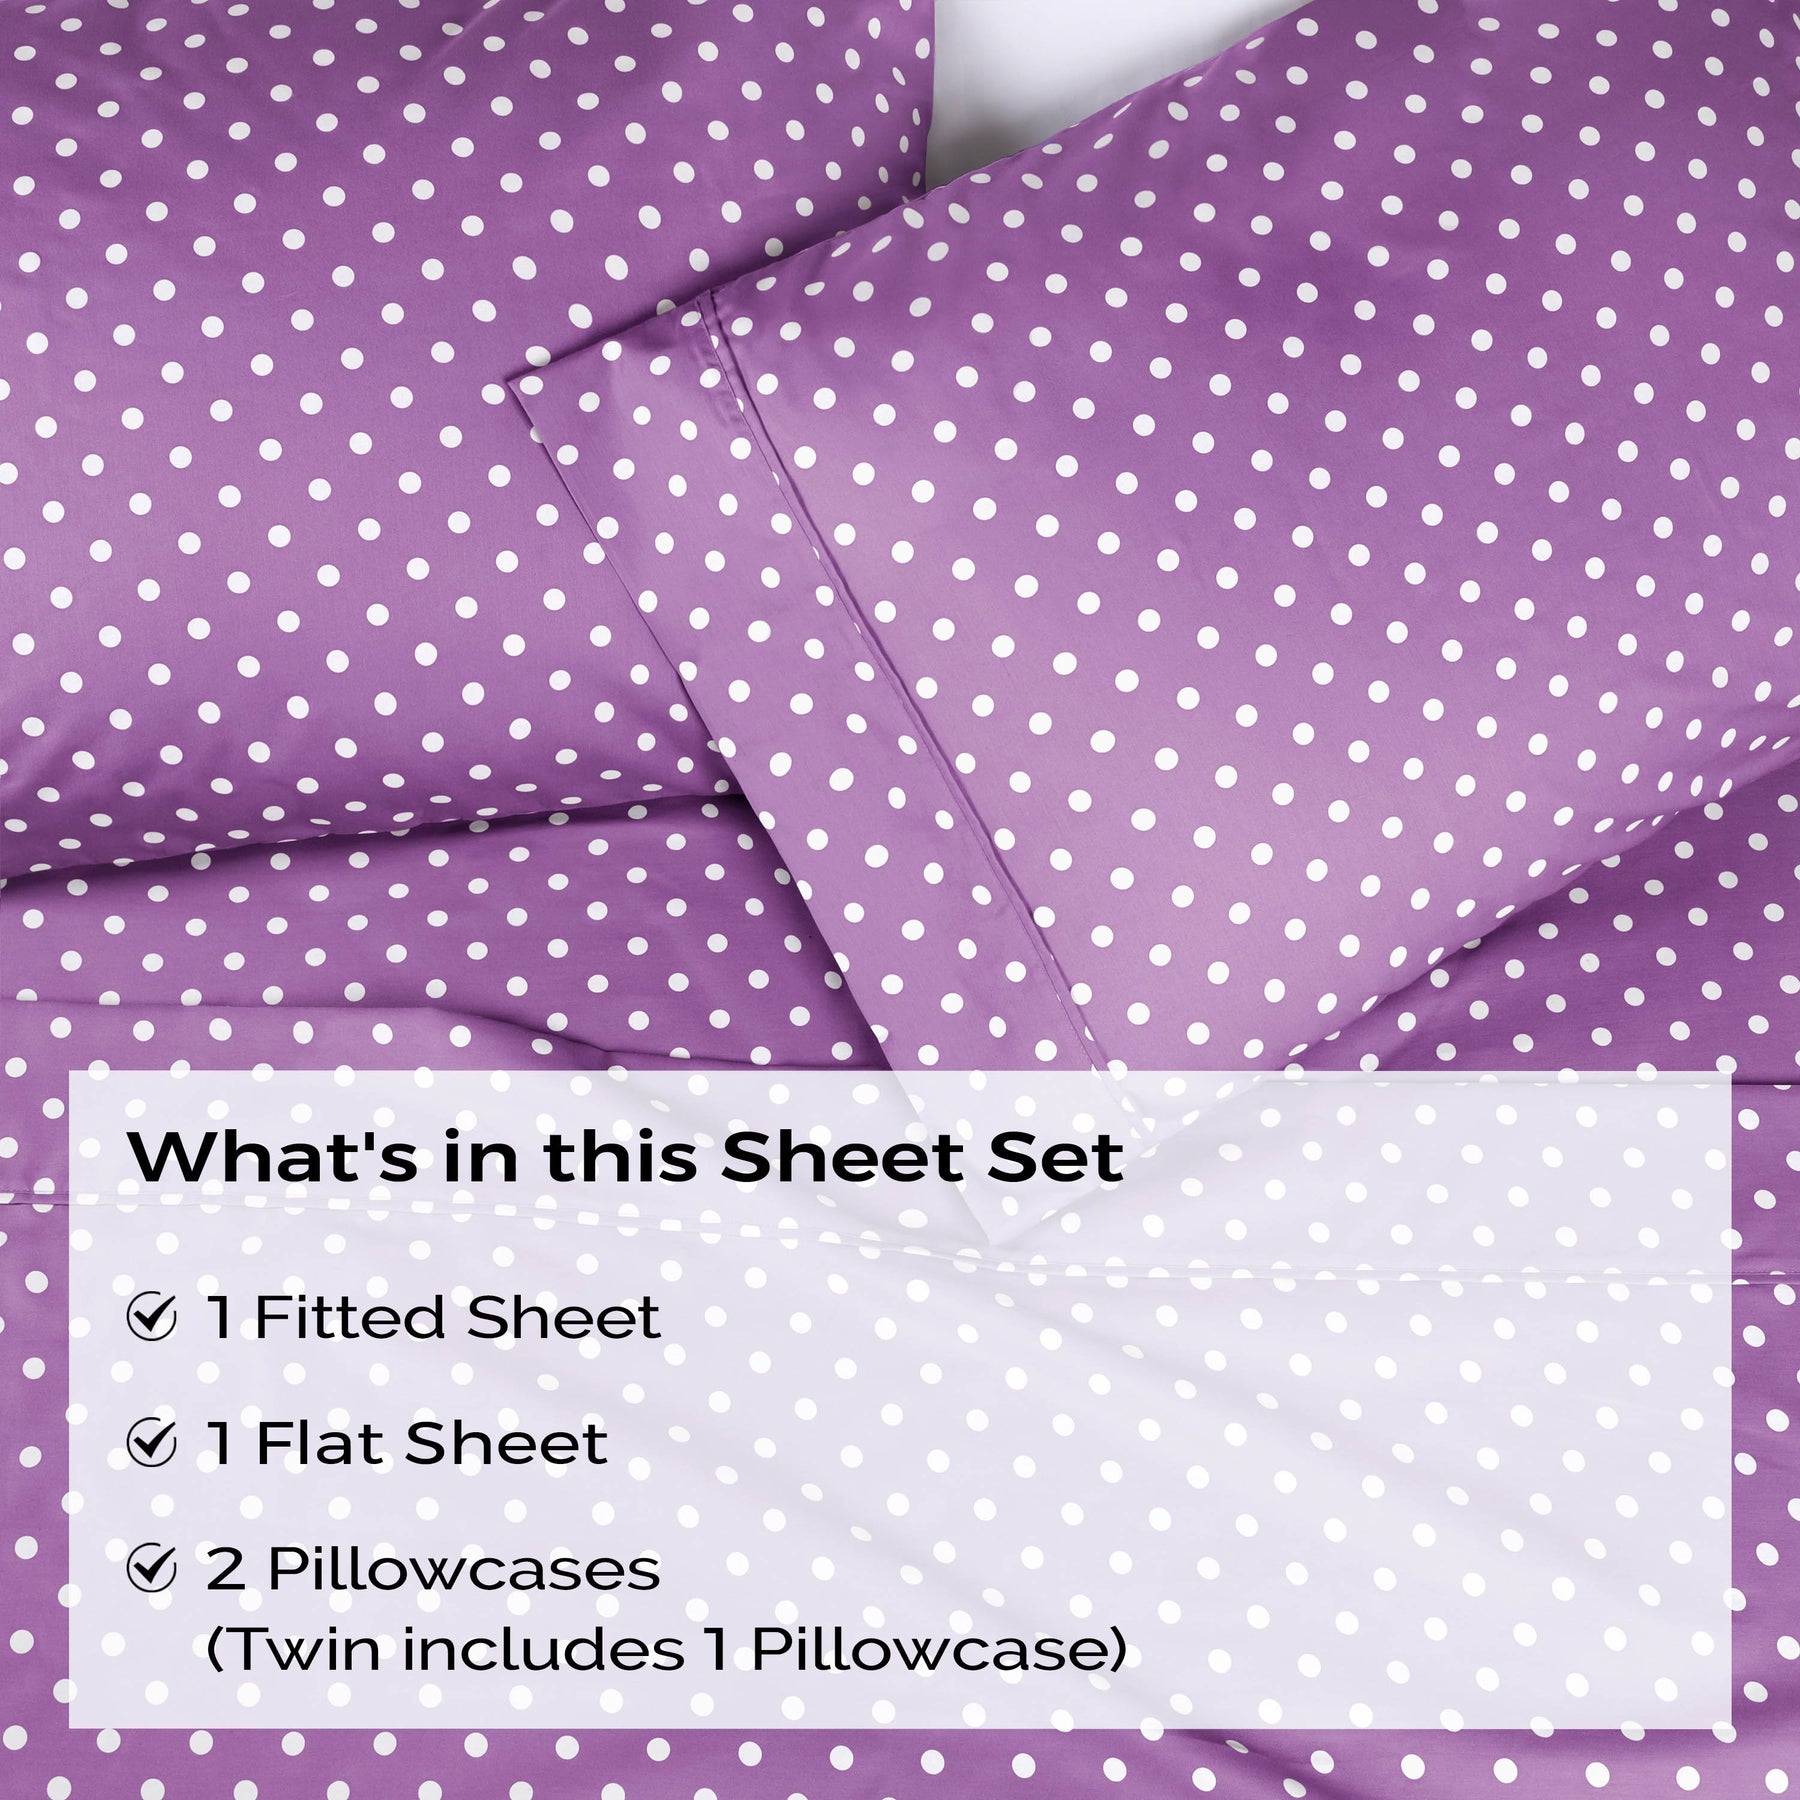 600 Thread Count Cotton Blend Polka Dot Luxury Deep Pocket Retro Bed Sheet Set - Lilac